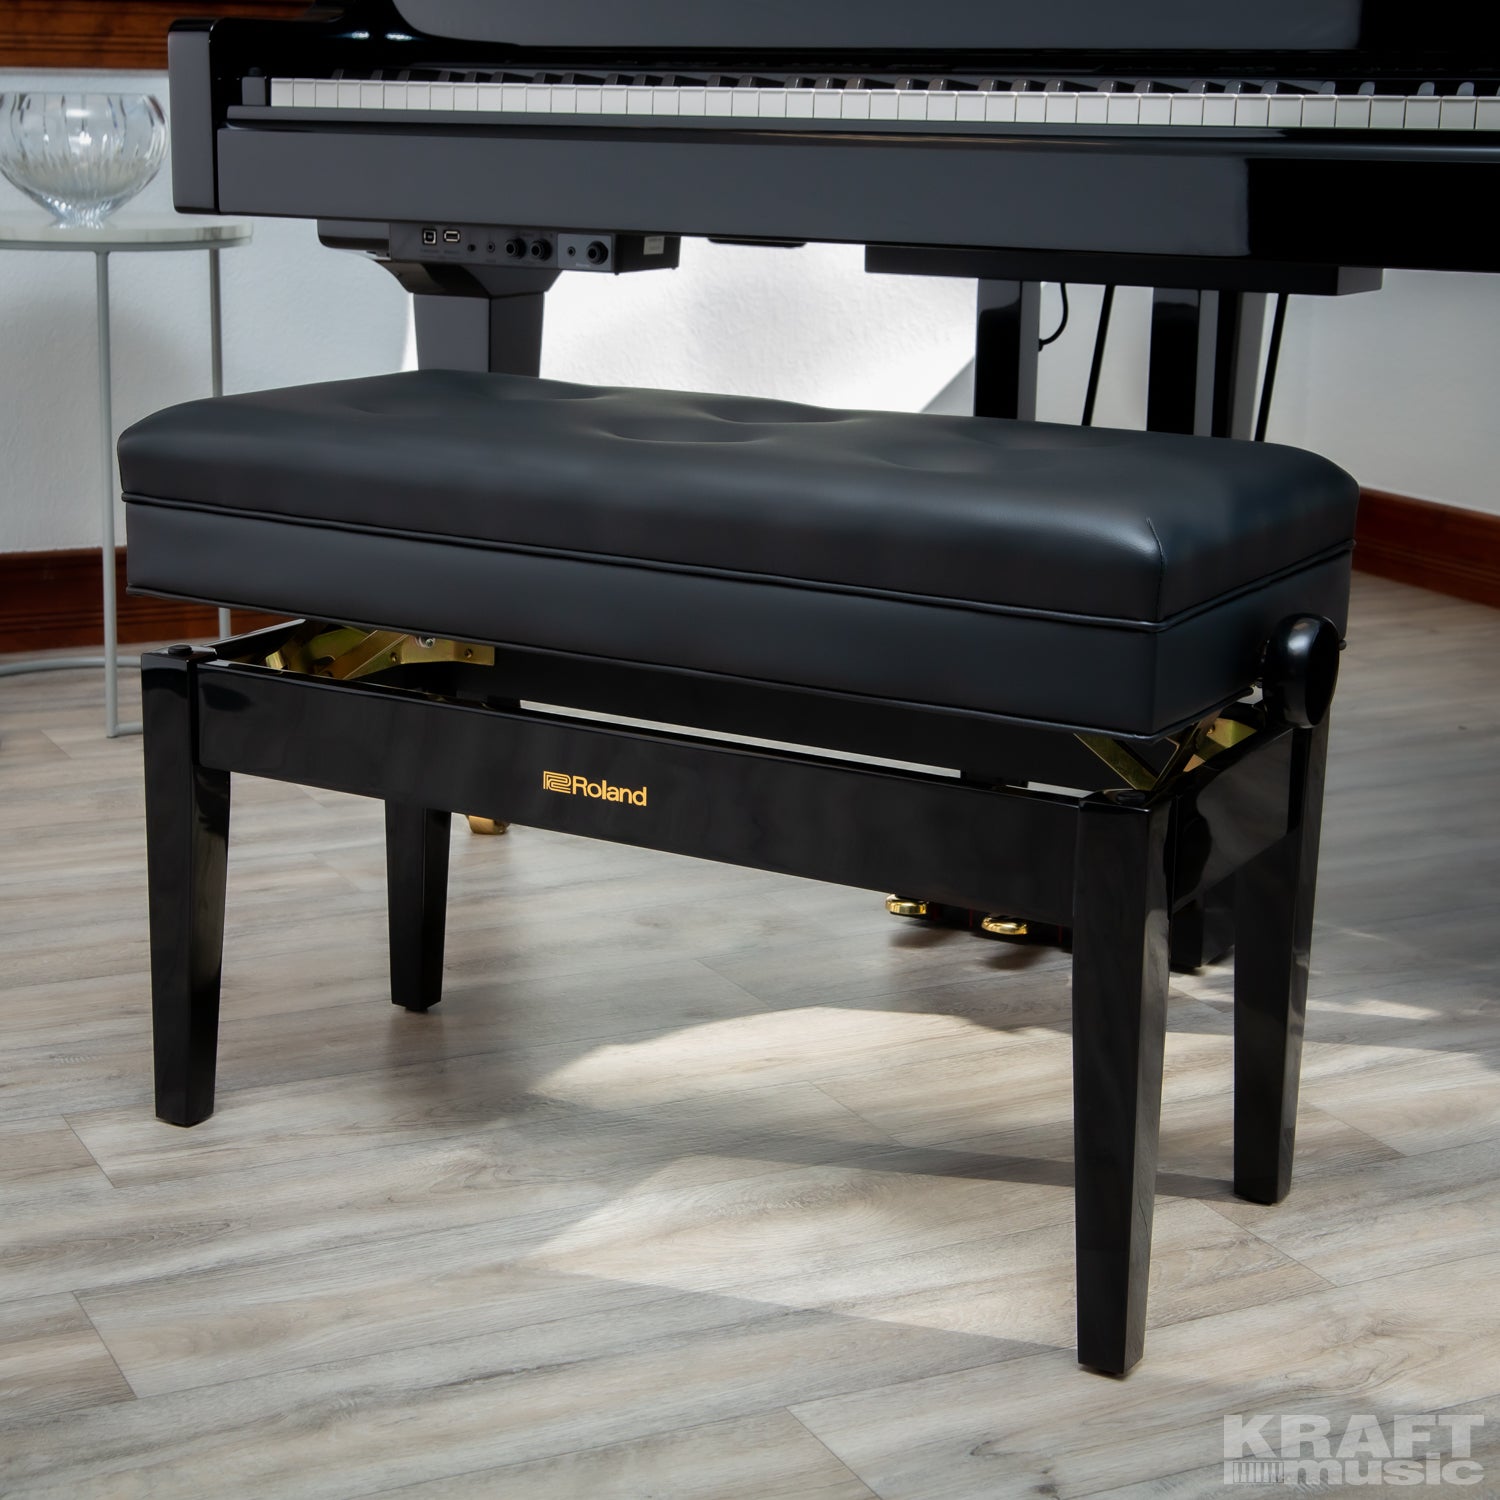 Roland GP609 Digital Grand Piano - Polished Ebony - bench